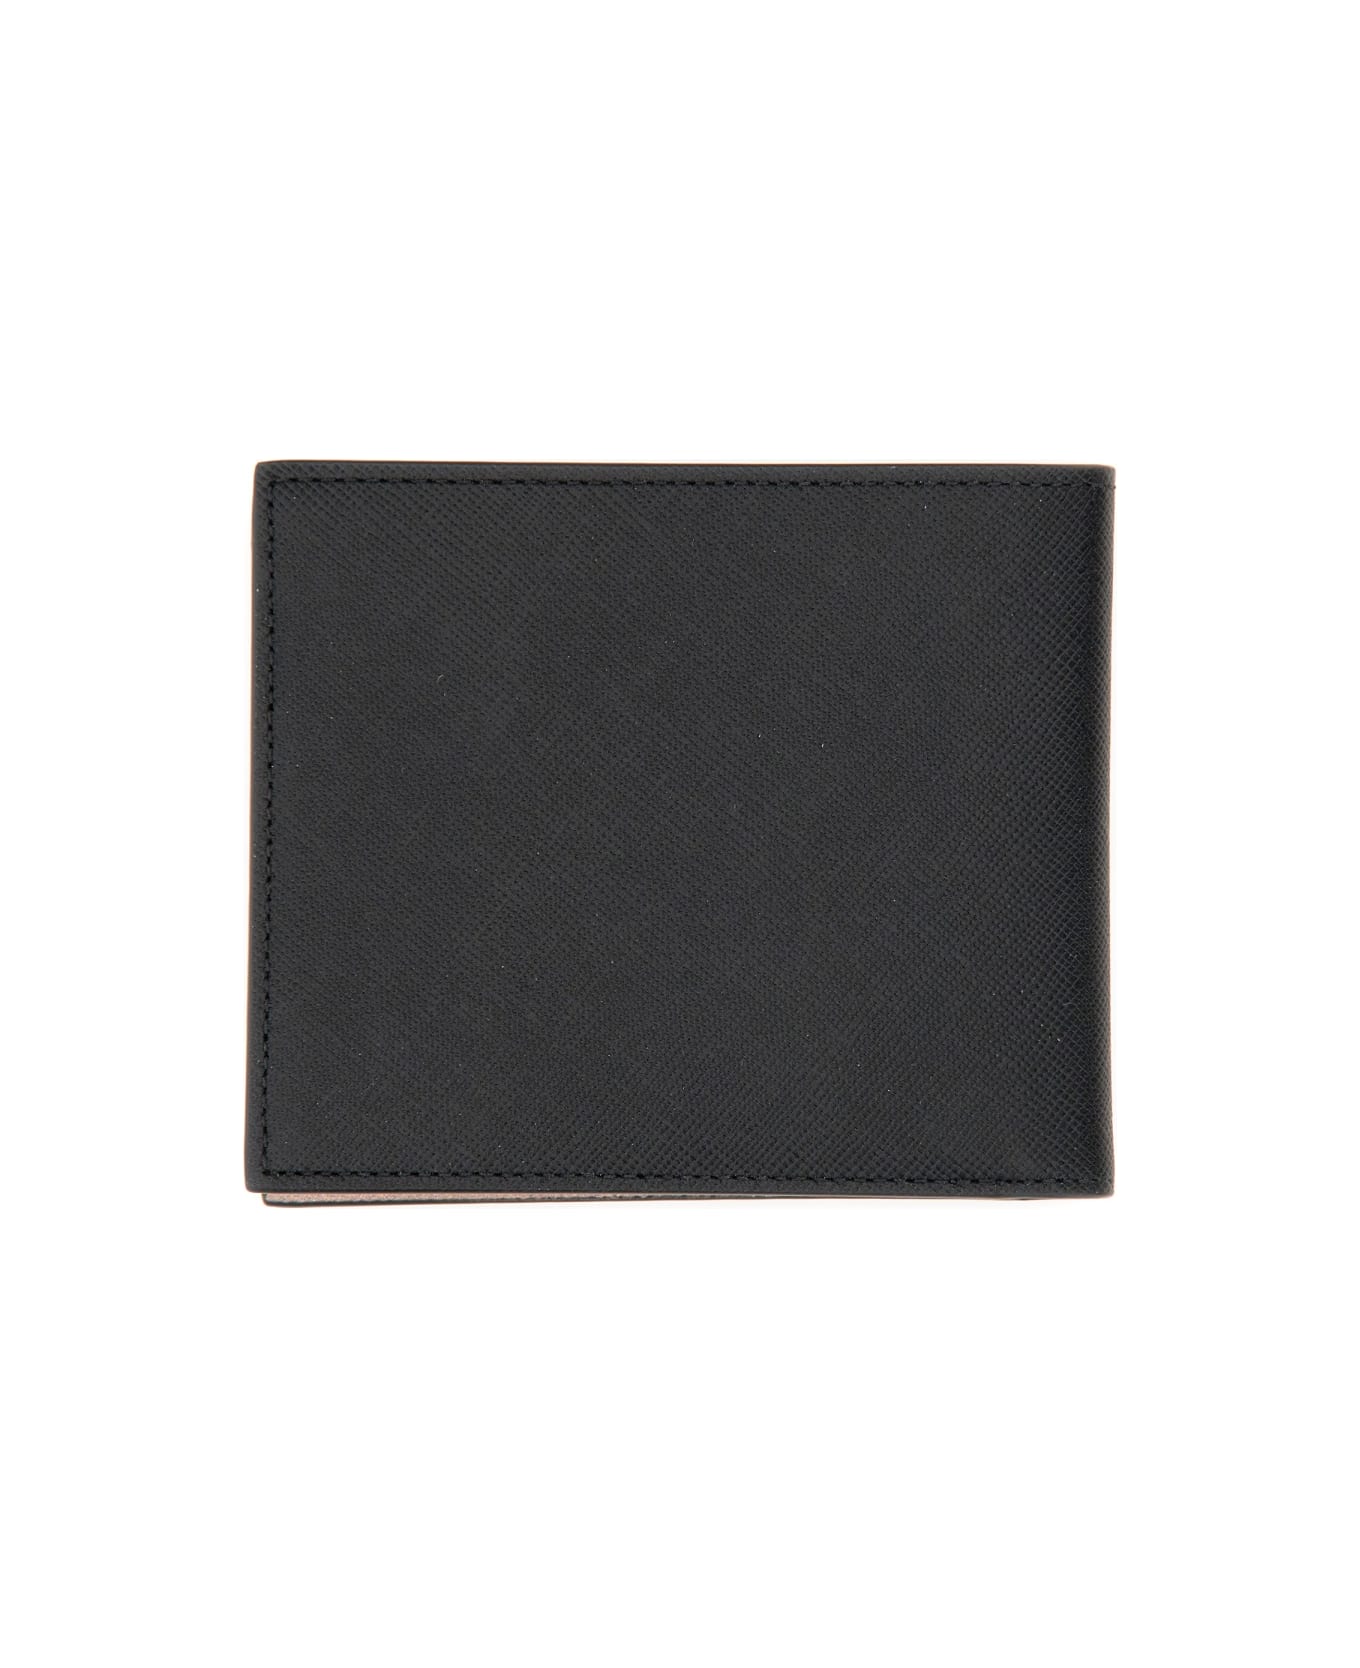 Paul Smith Leather Wallet - MULTICOLOUR